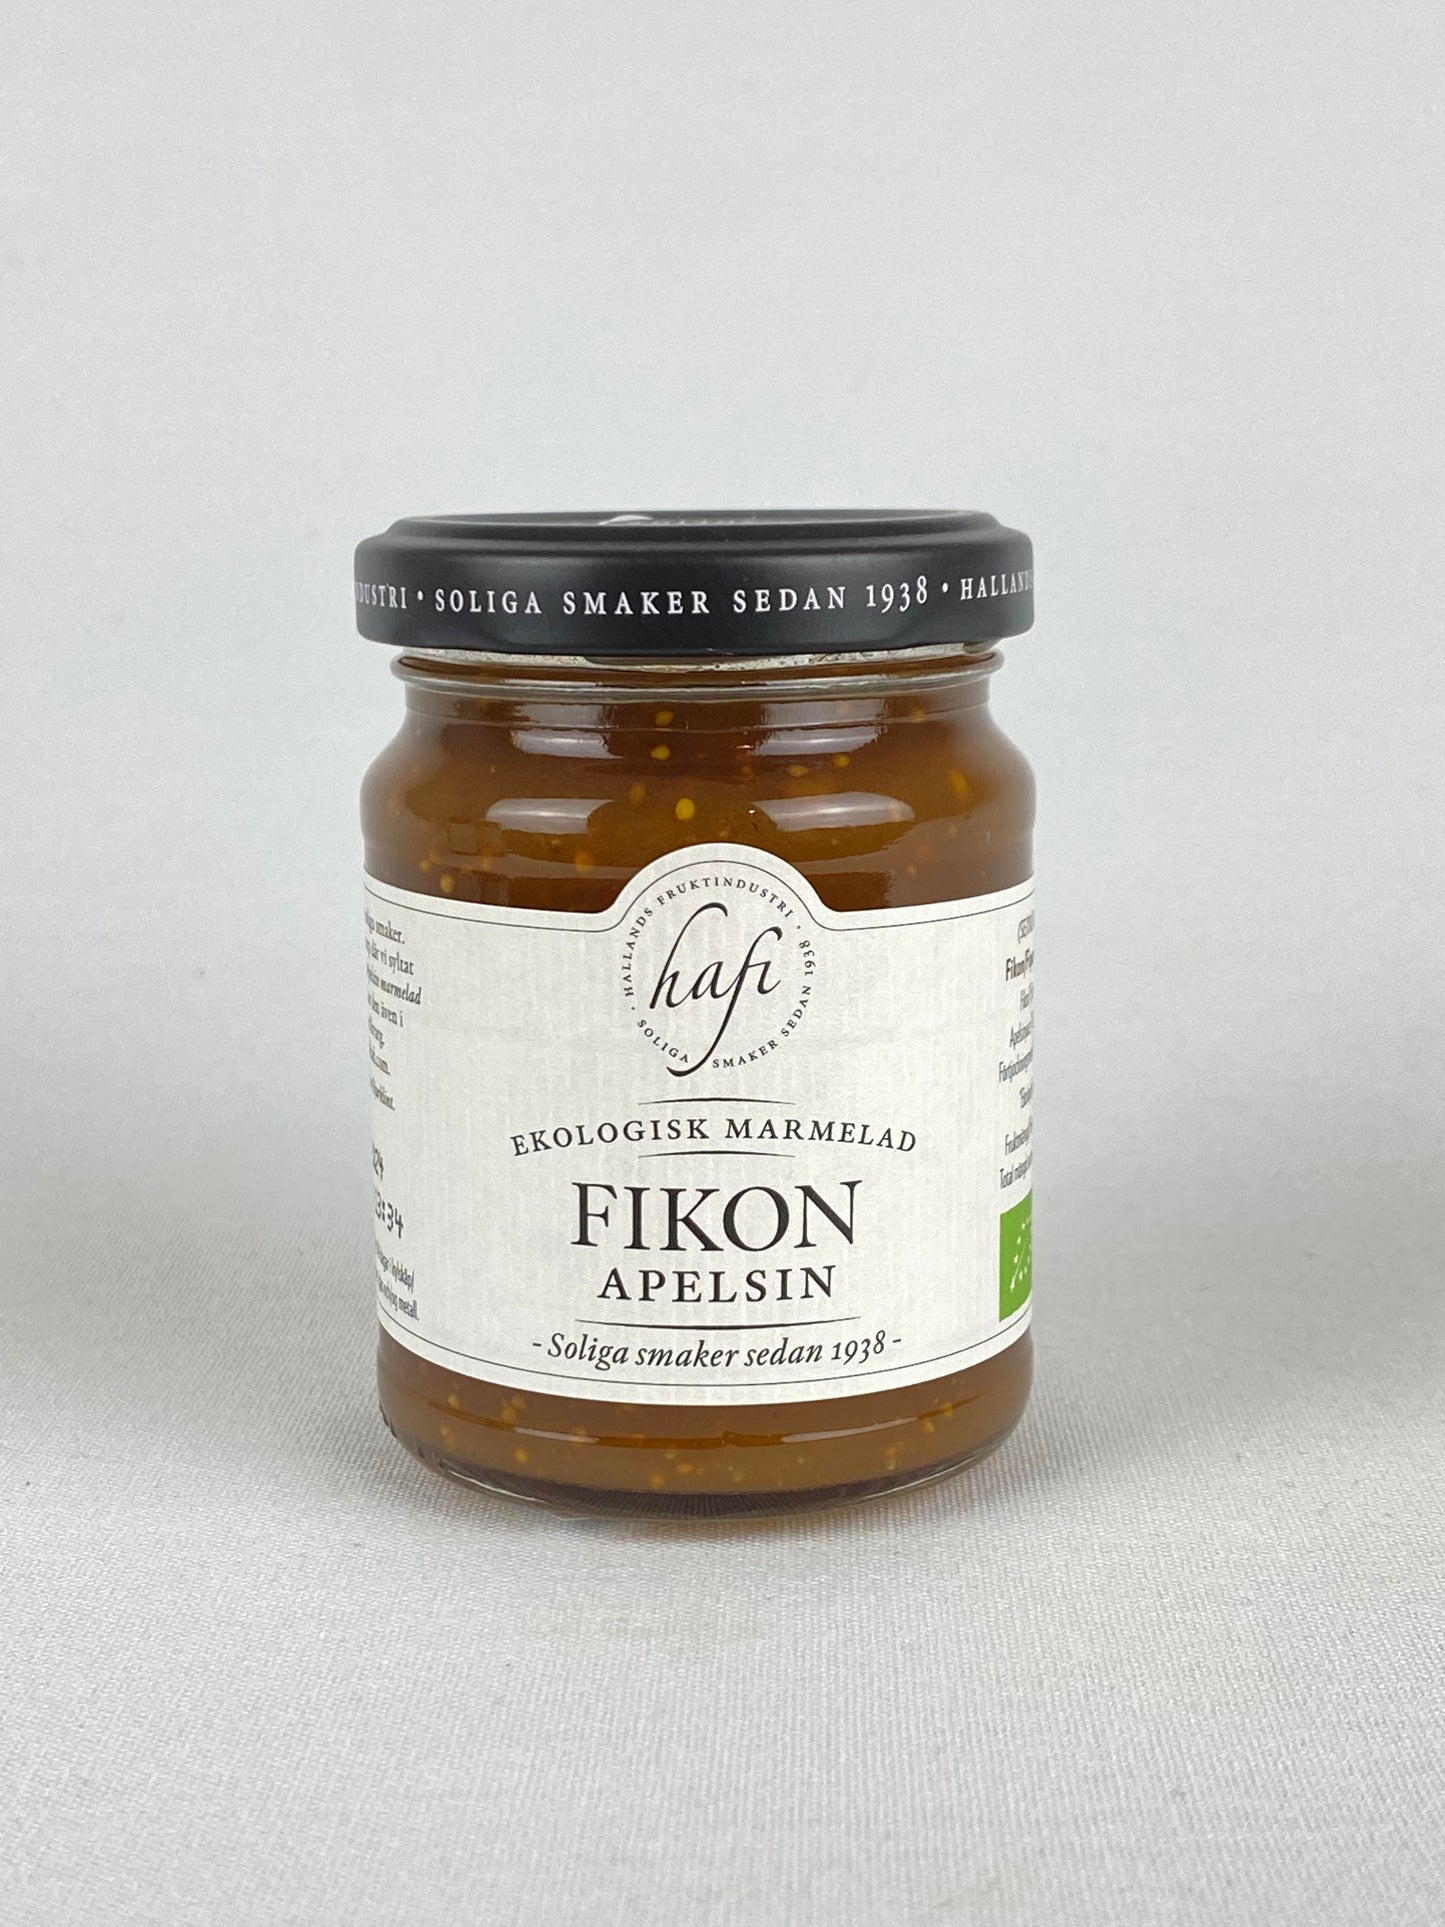 Hafi Fikon & Apelsin marmelad